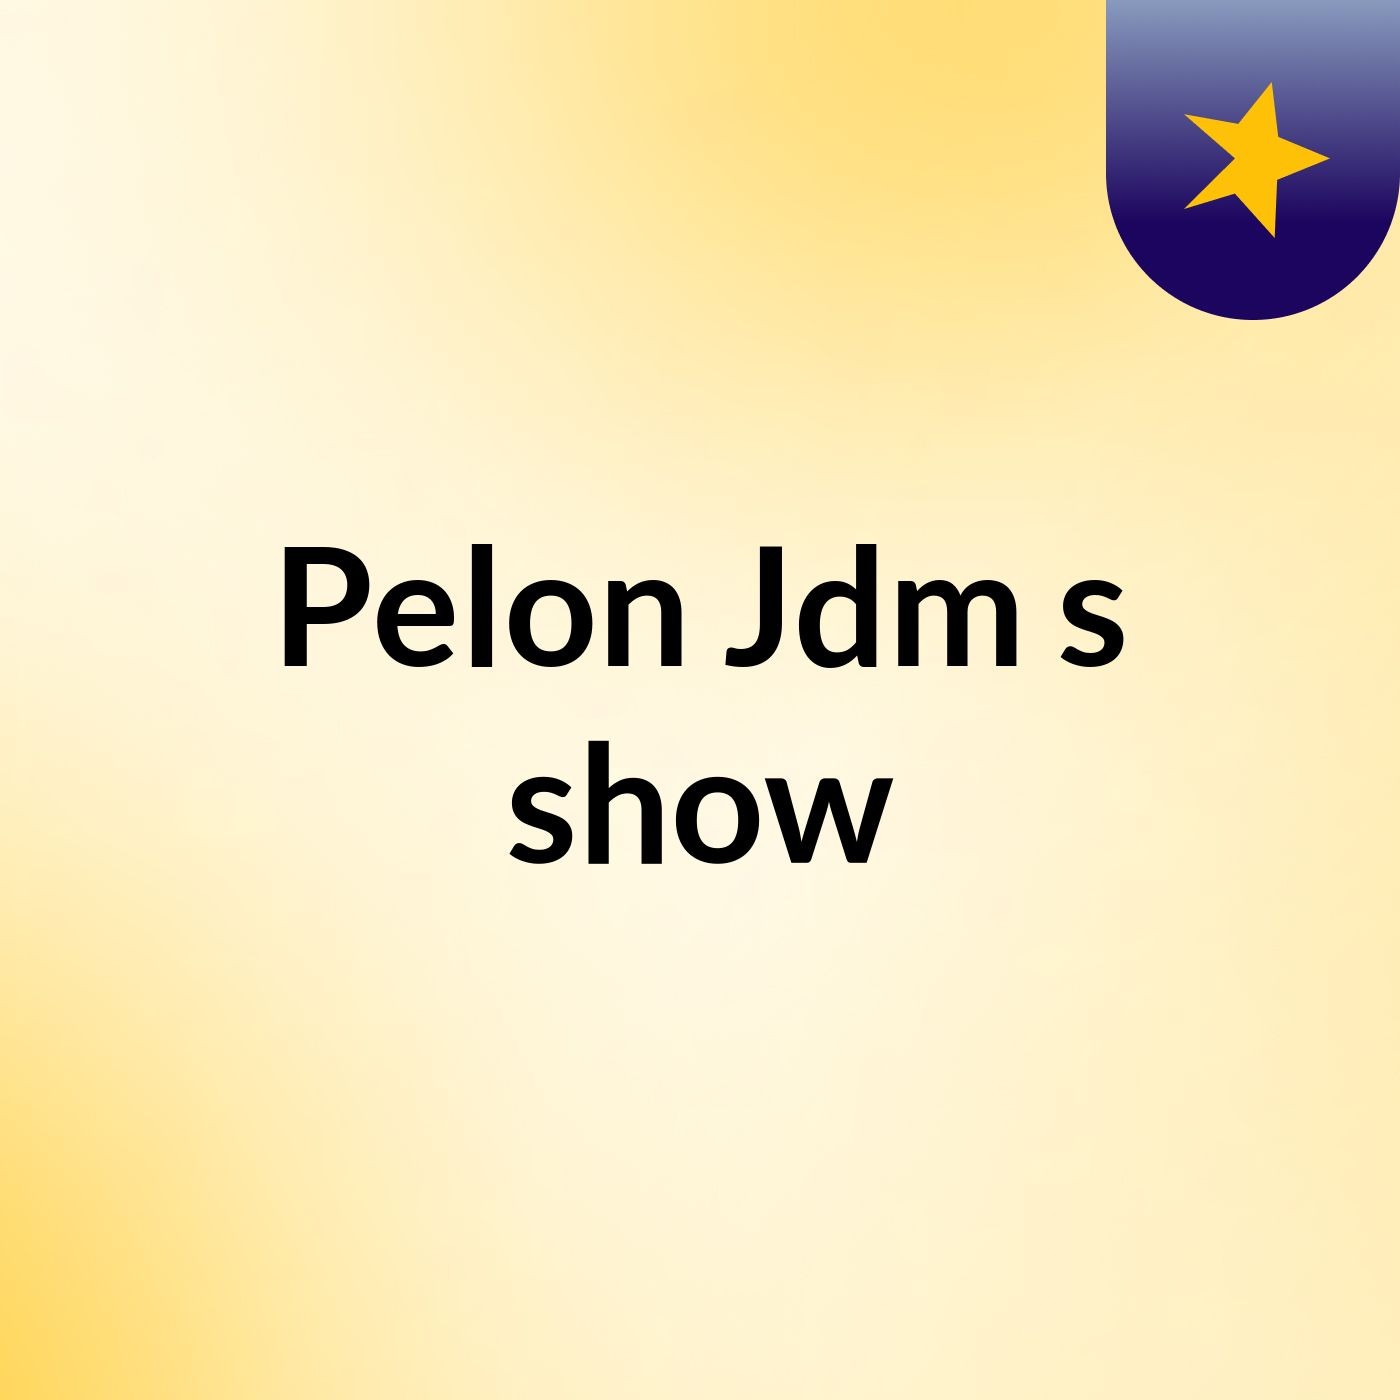 Pelon Jdm's show